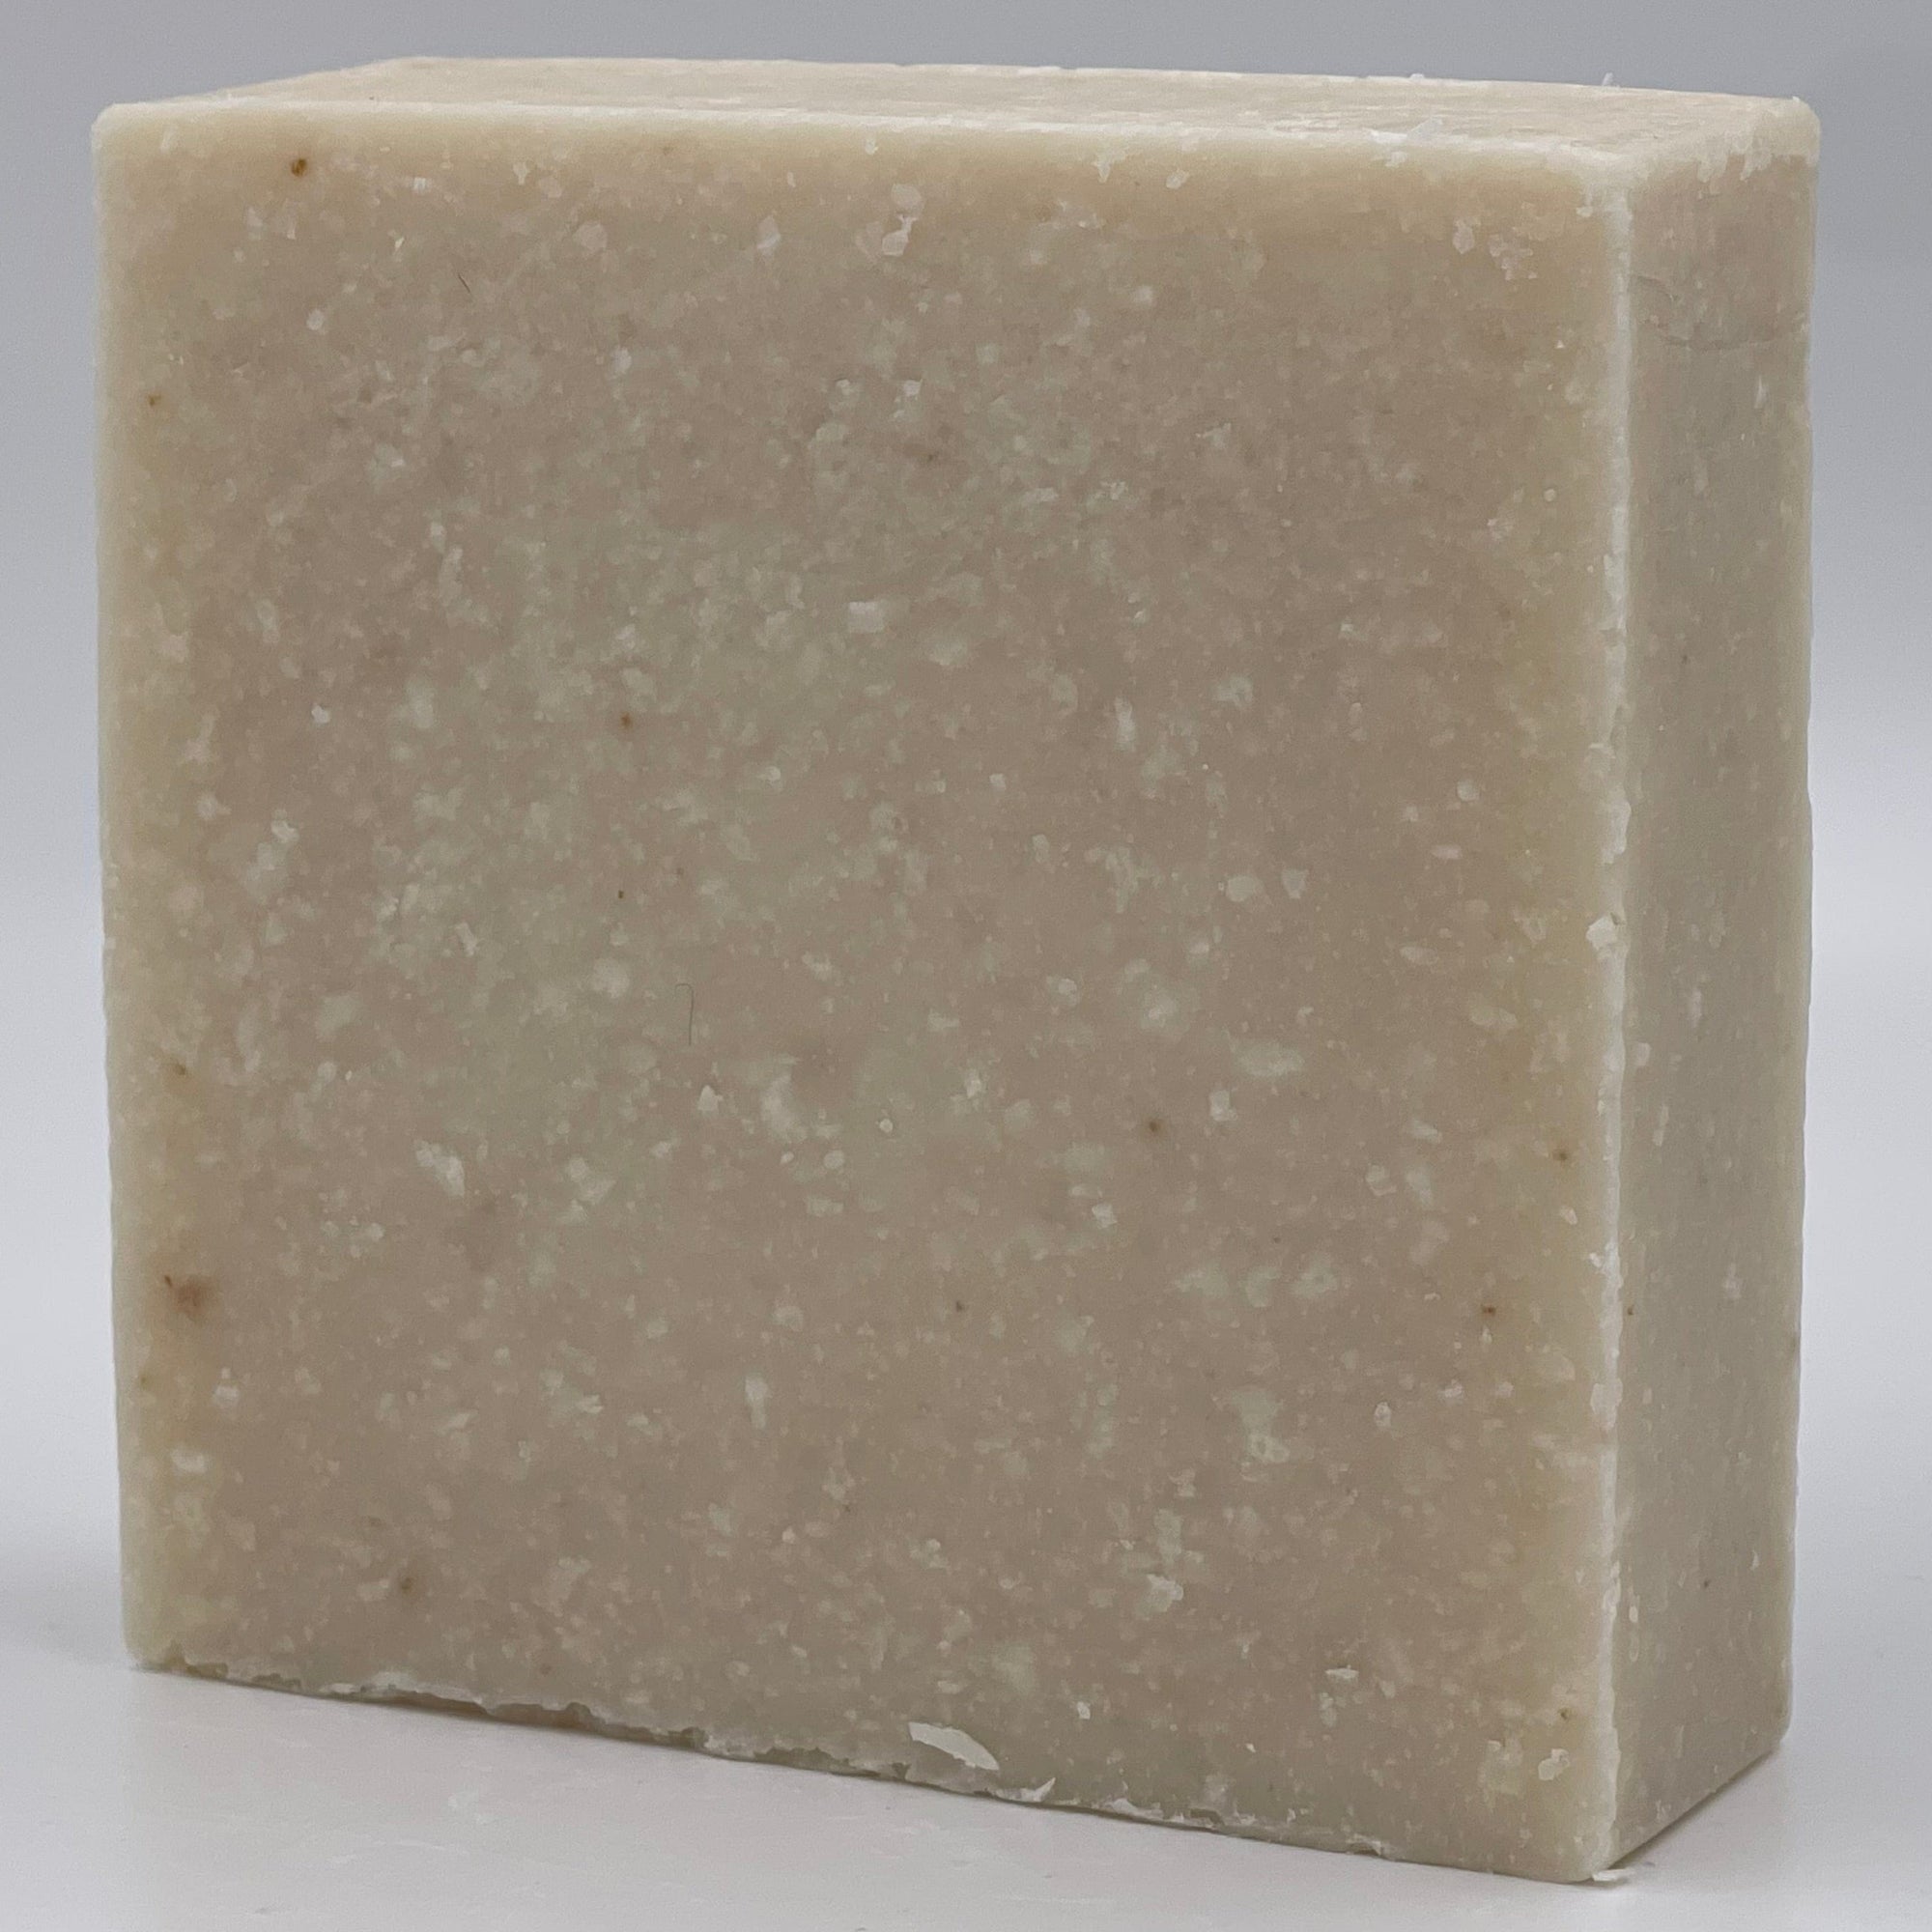 Milk & Collagen Facial Soap